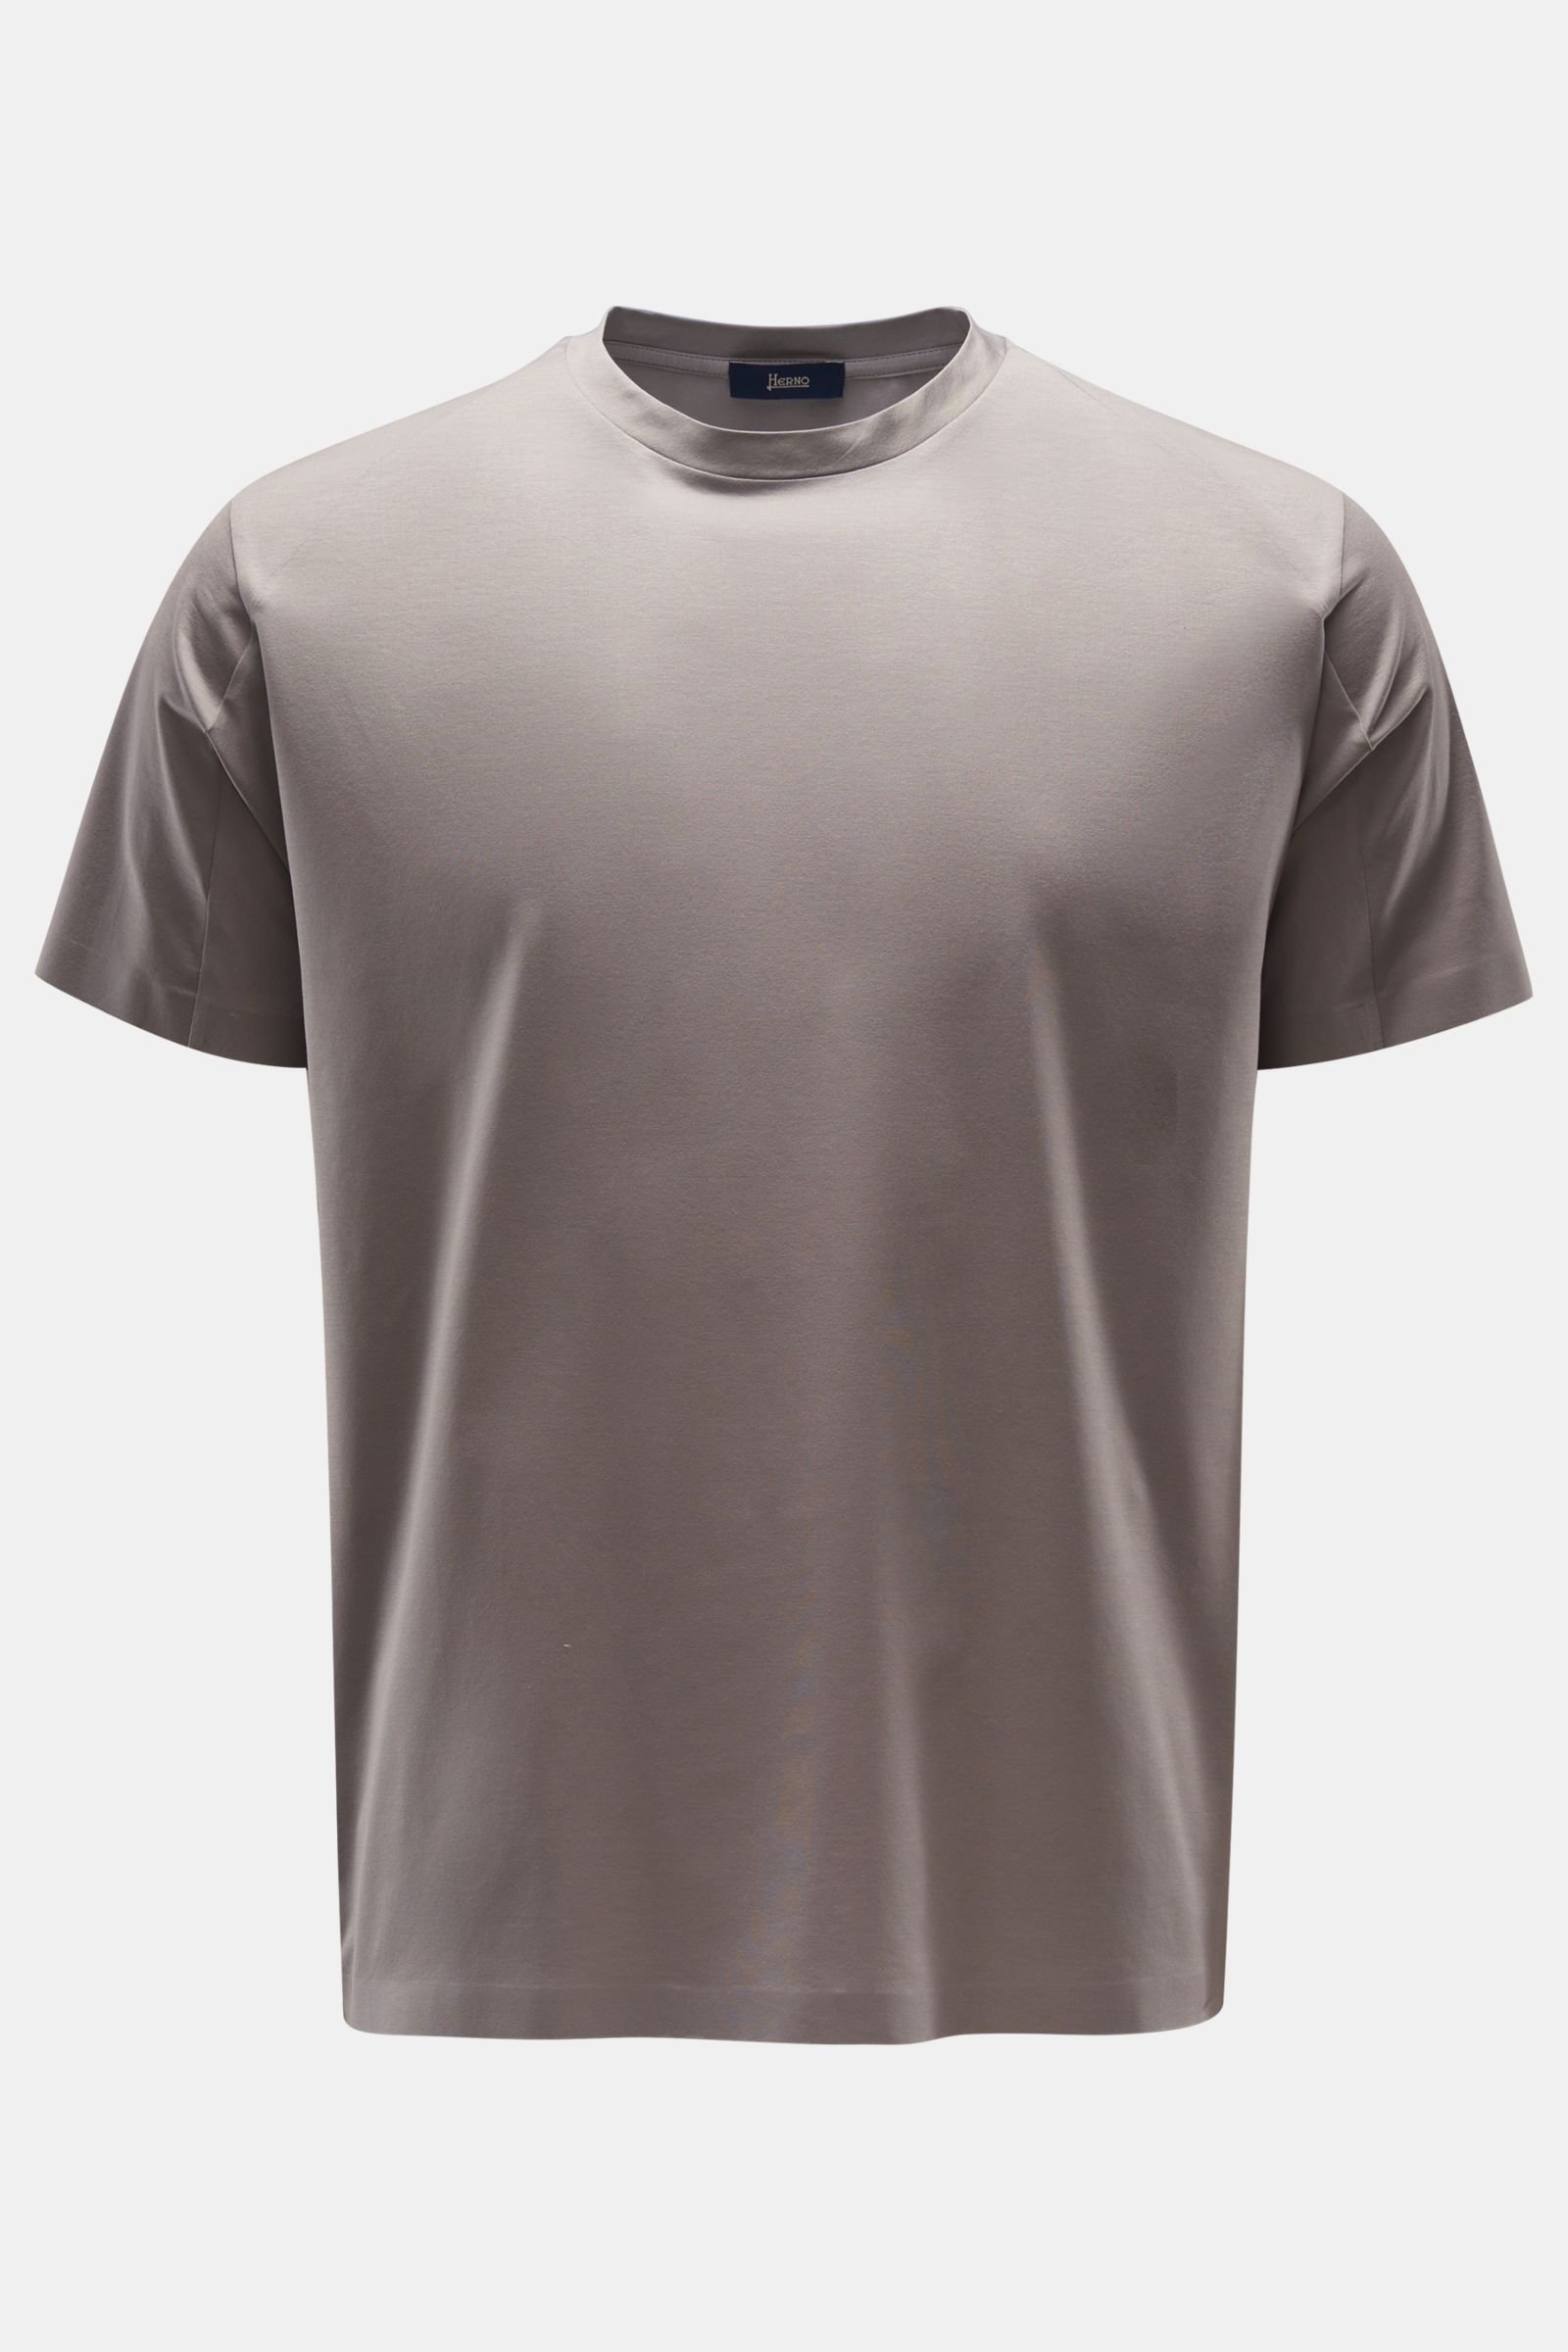 Rundhals-T-Shirt grau